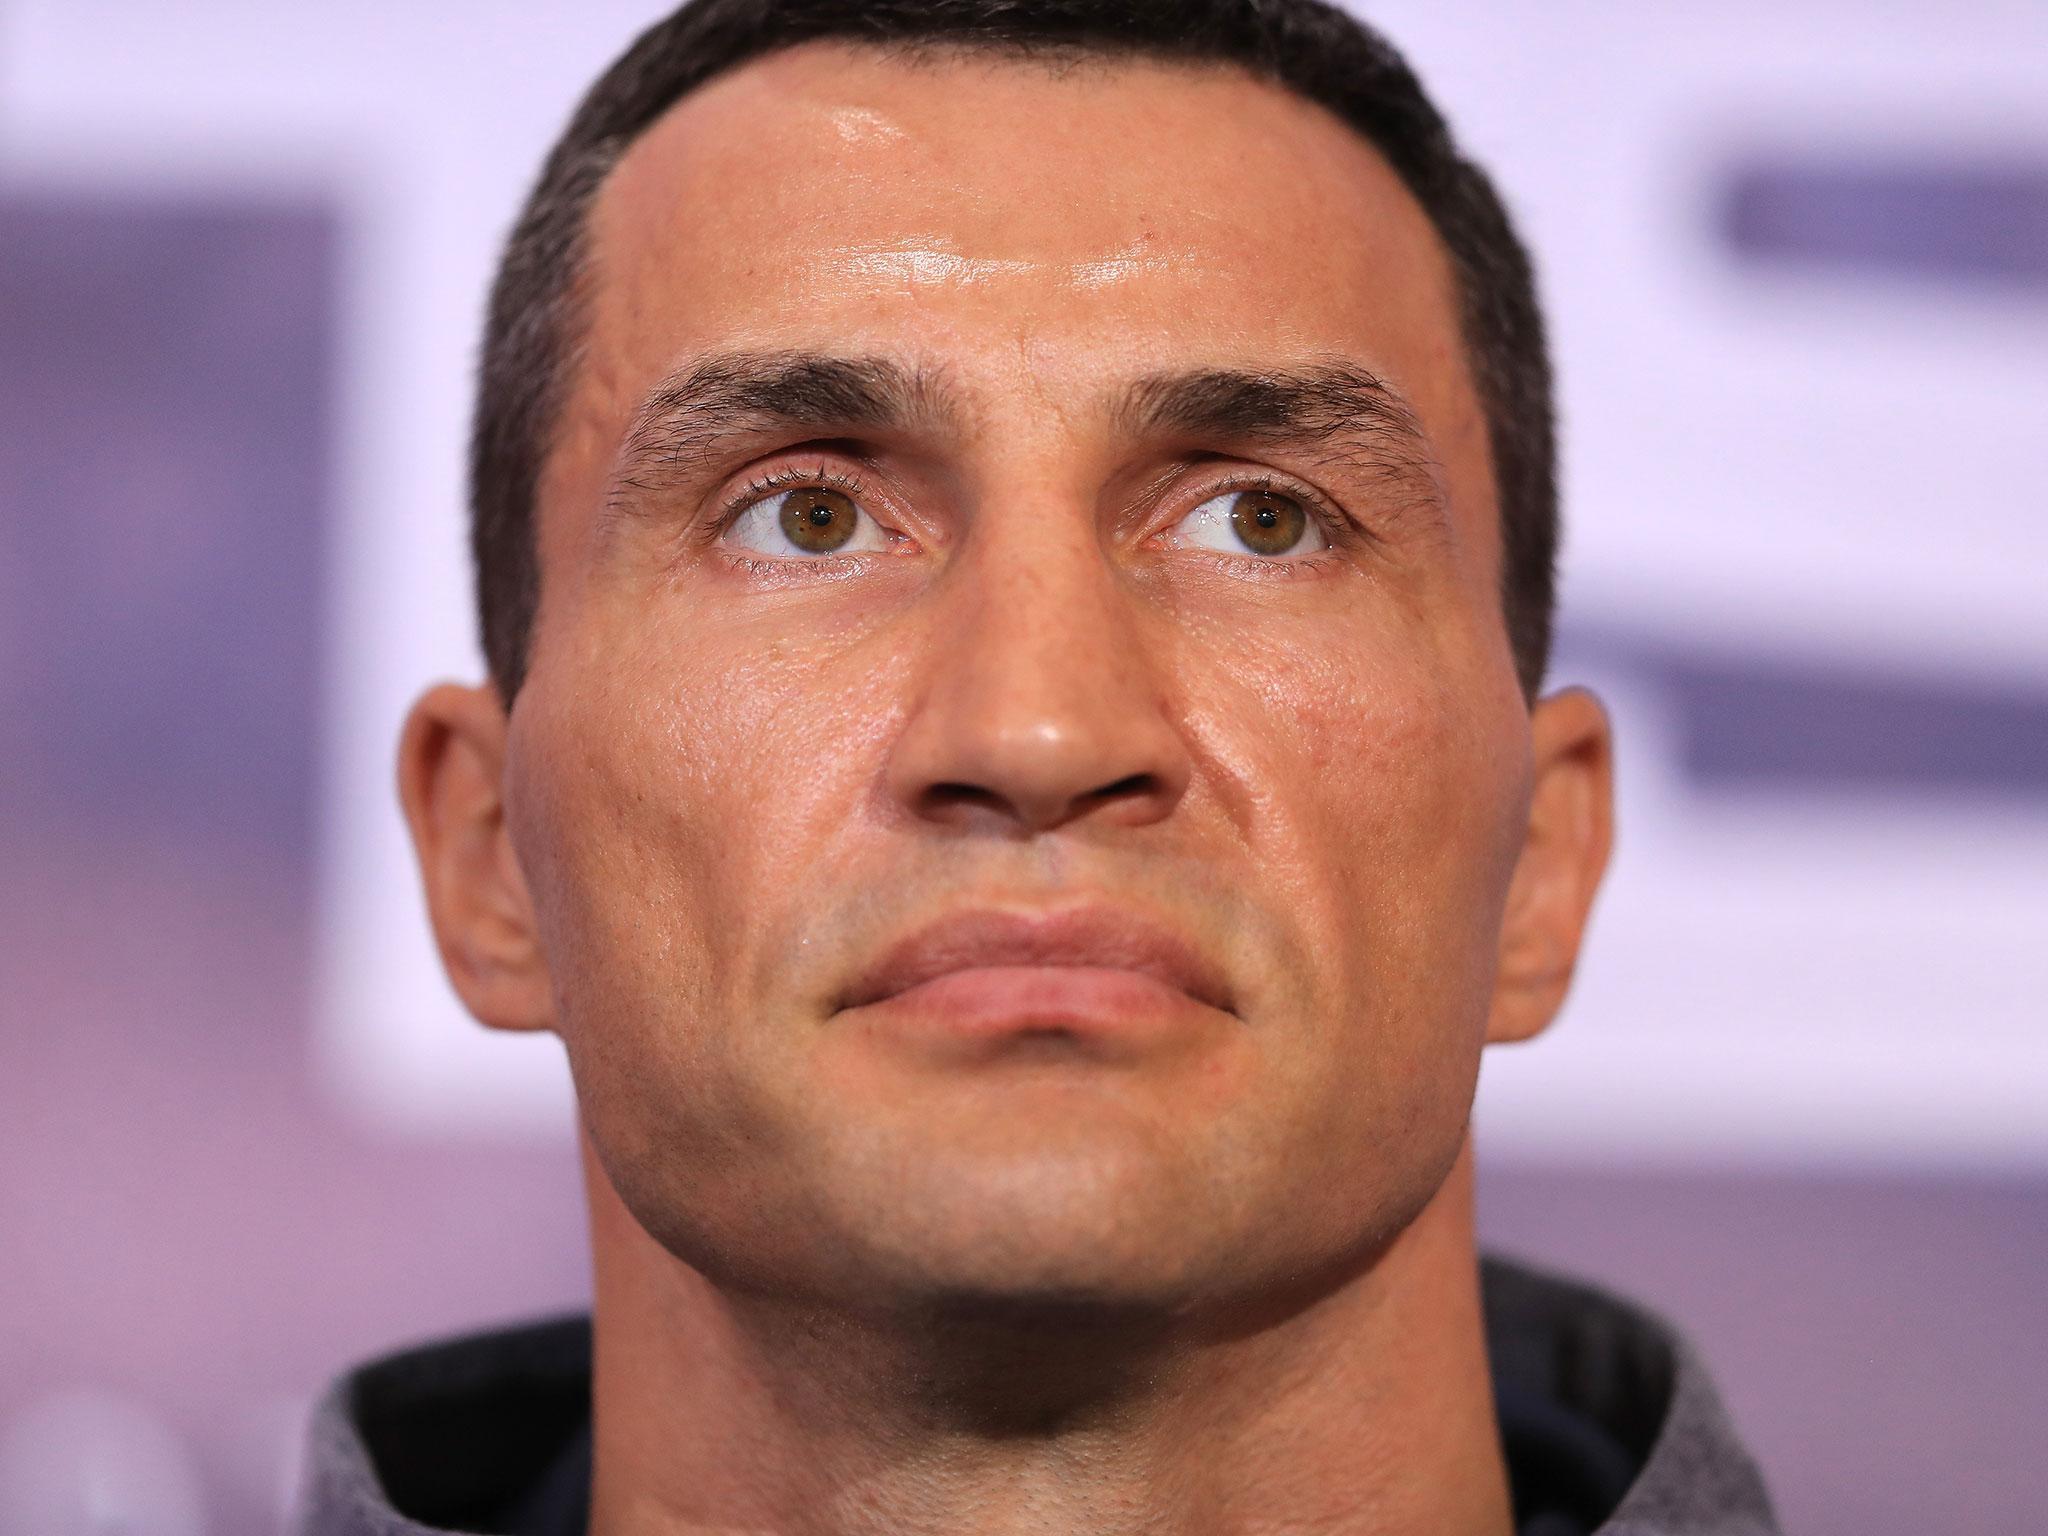 Wladimir Klitschko is in confident mood ahead of the Wembley showdown